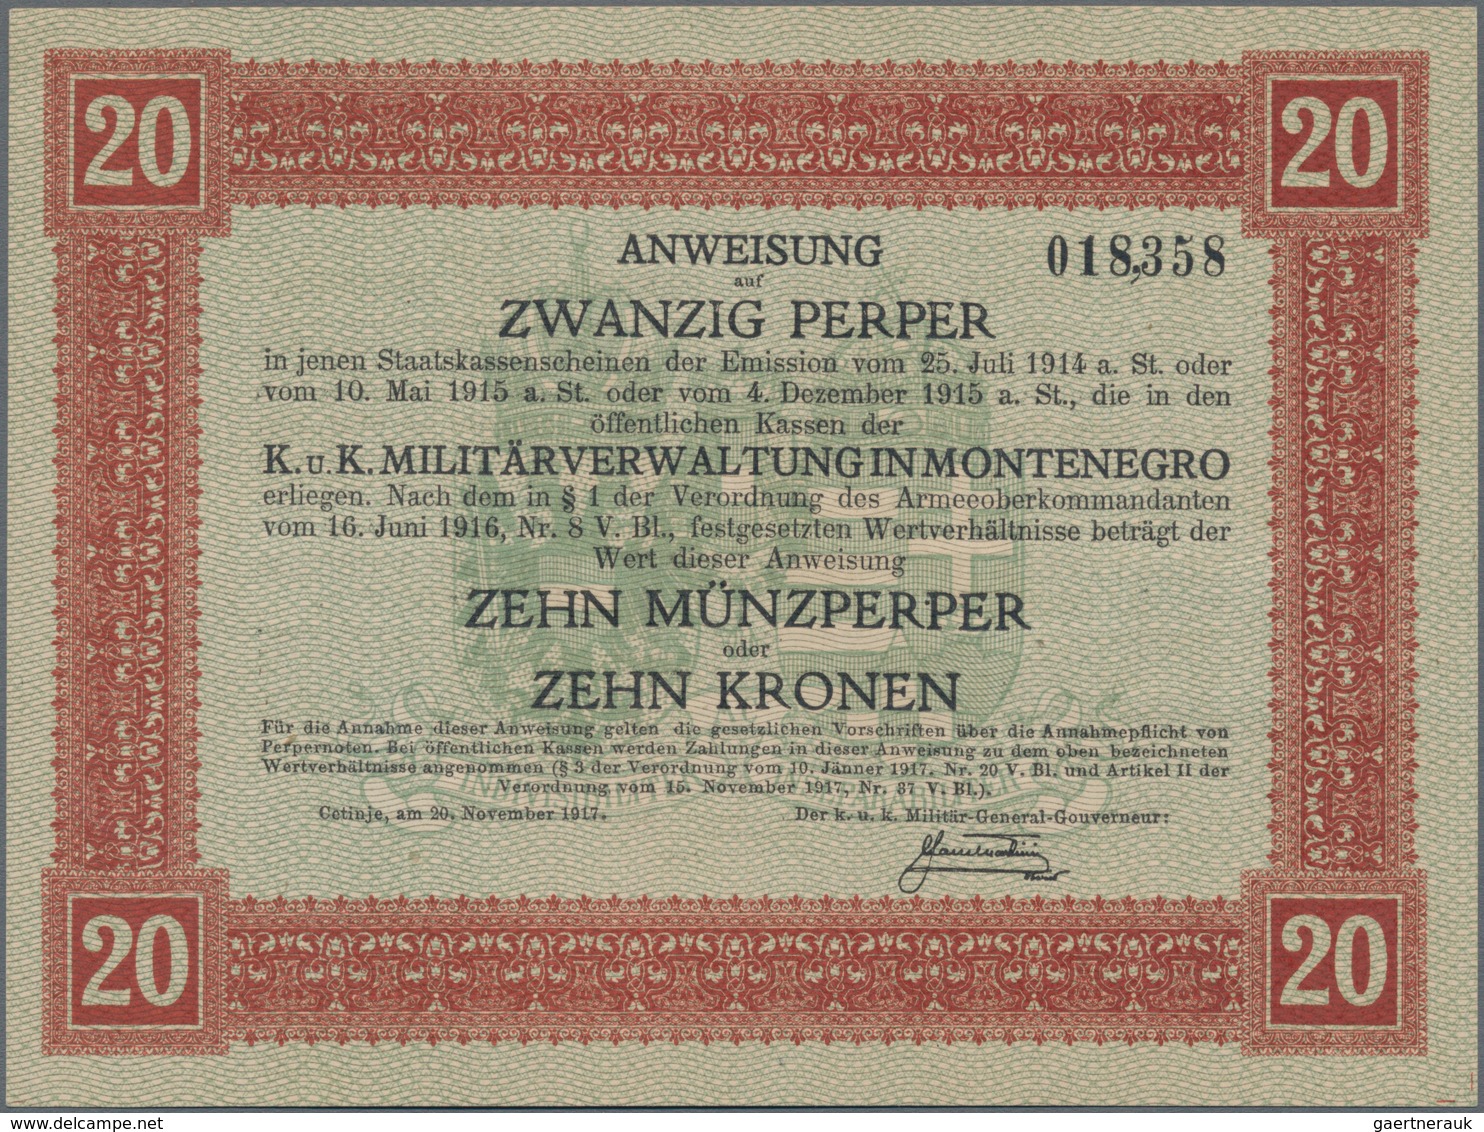 Montenegro: K.u.K. Militärverwaltung in Montenegro, set with 7 banknotes of the 1917 "Münzperper" Co